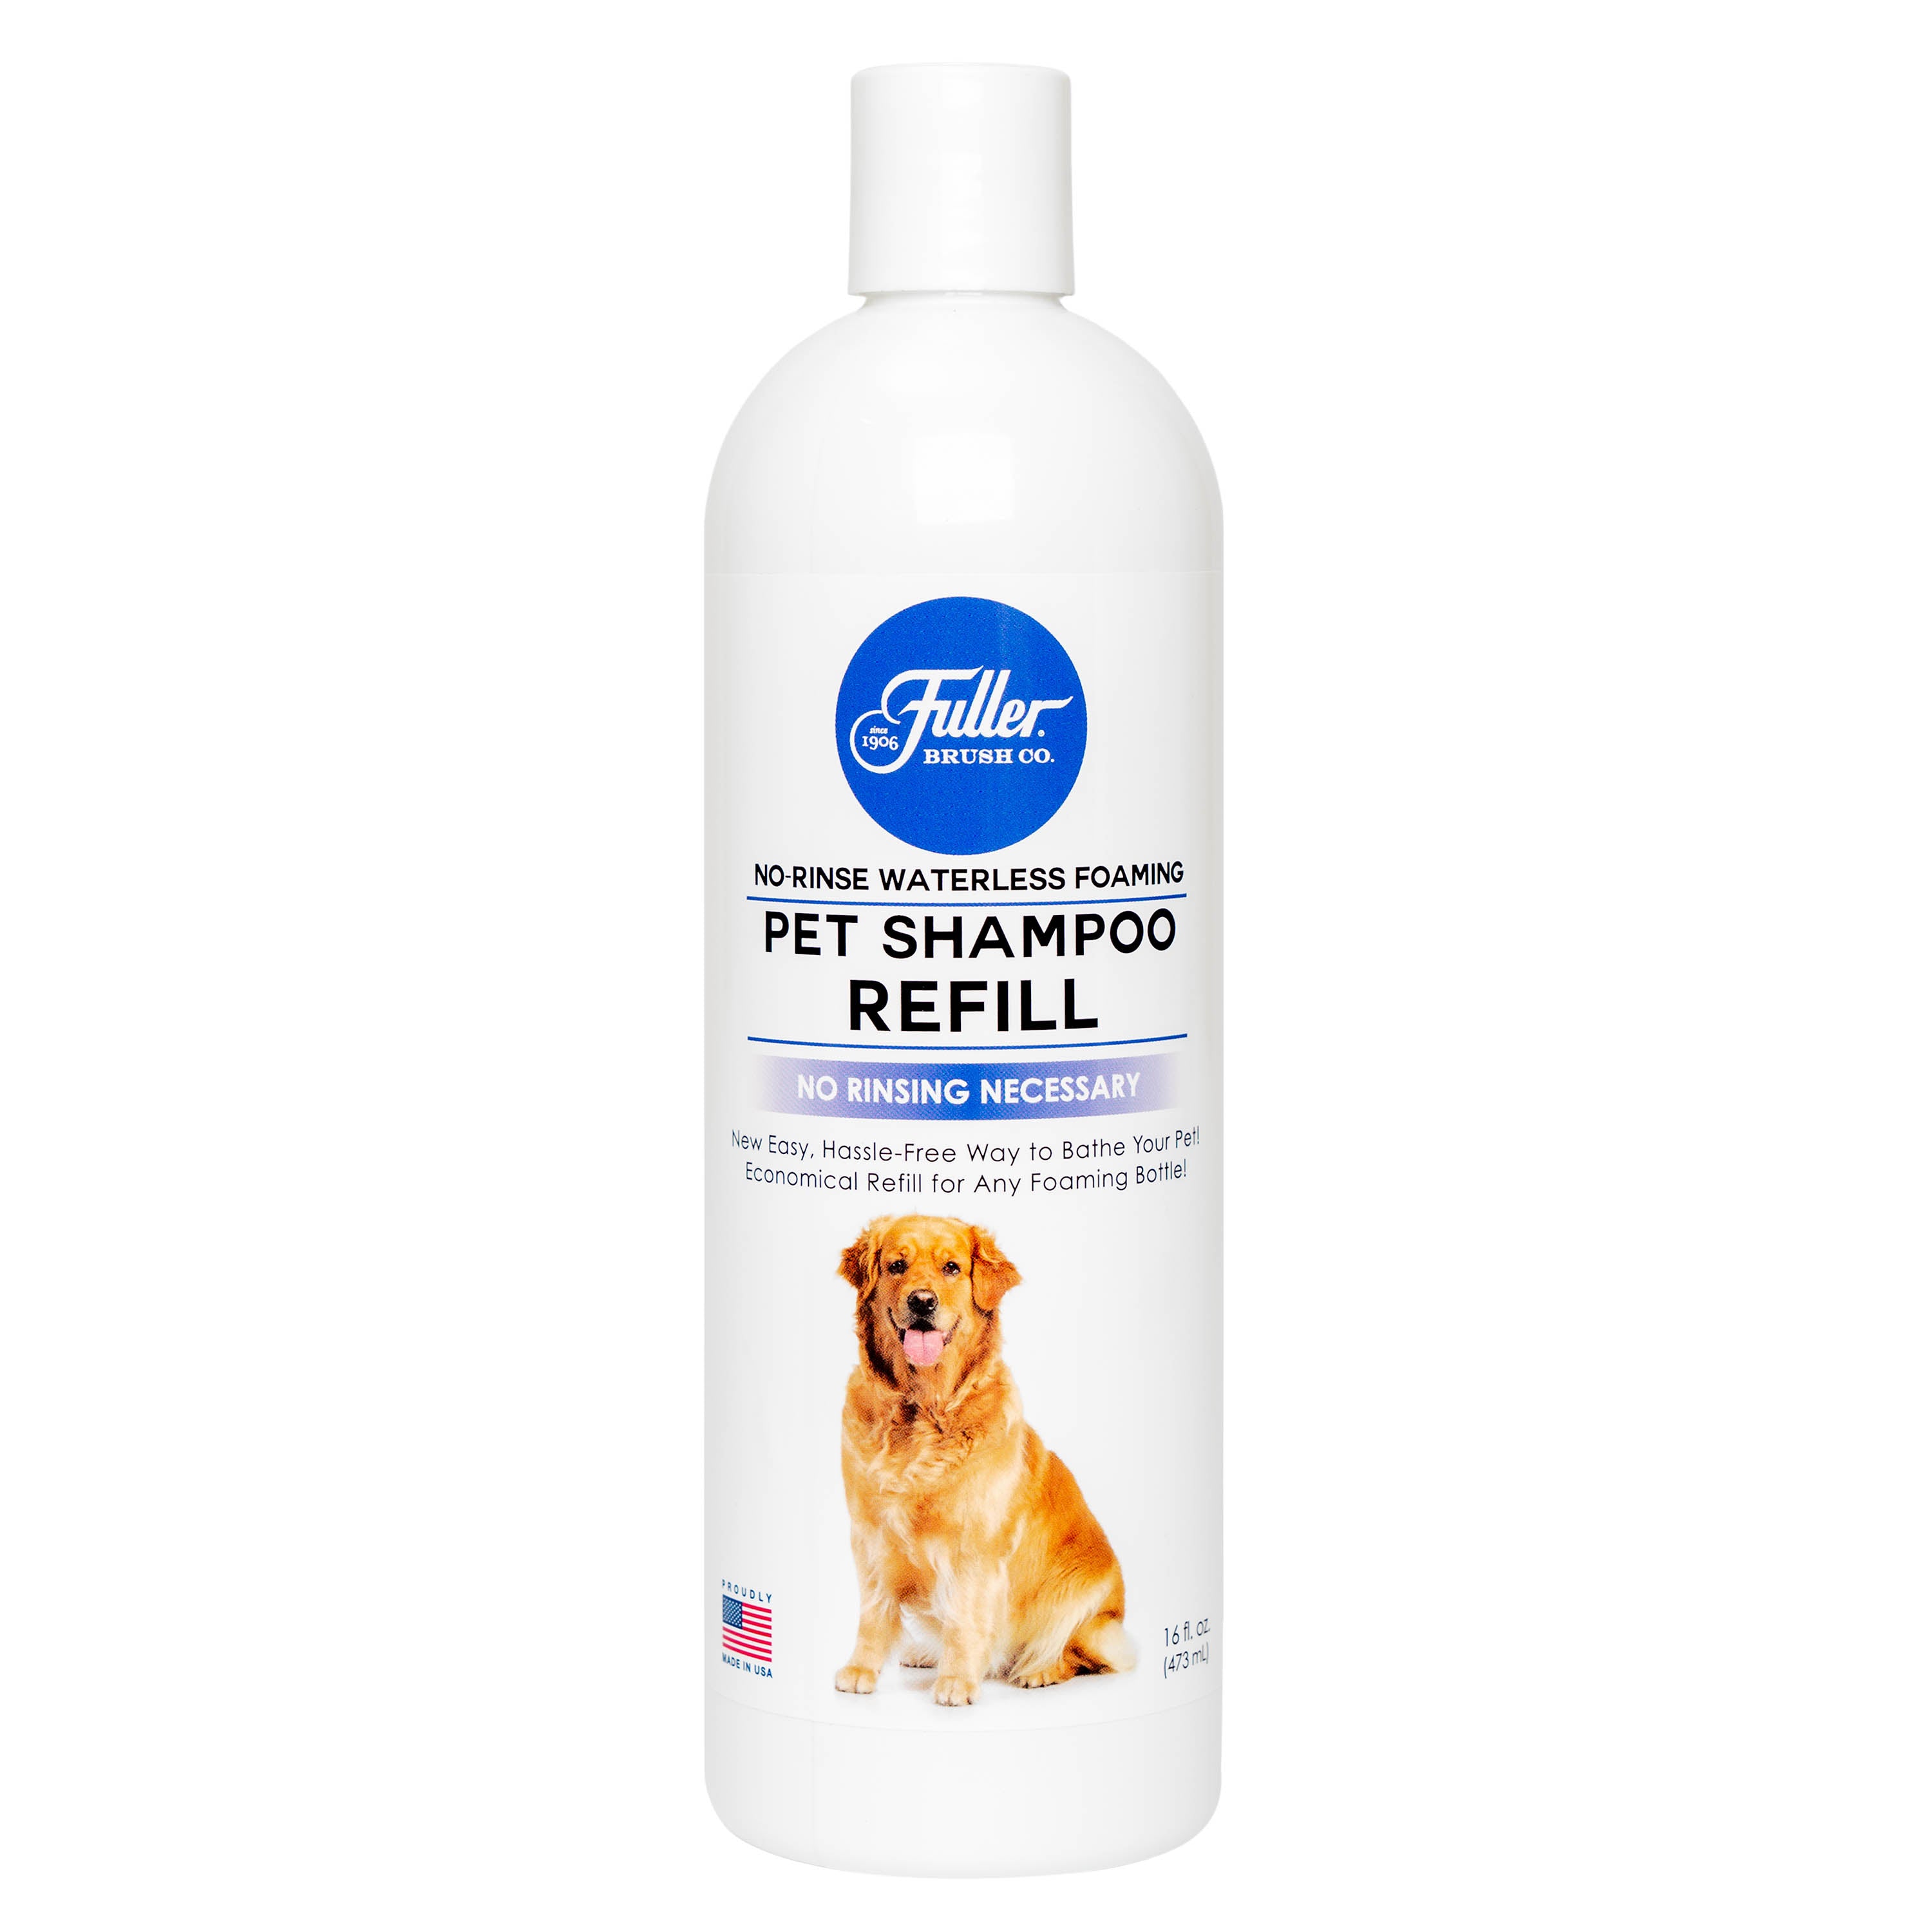 Waterless No-Rinse Foaming Pet Shampoo For Dogs - Refill Bottle (16 fl. oz.)